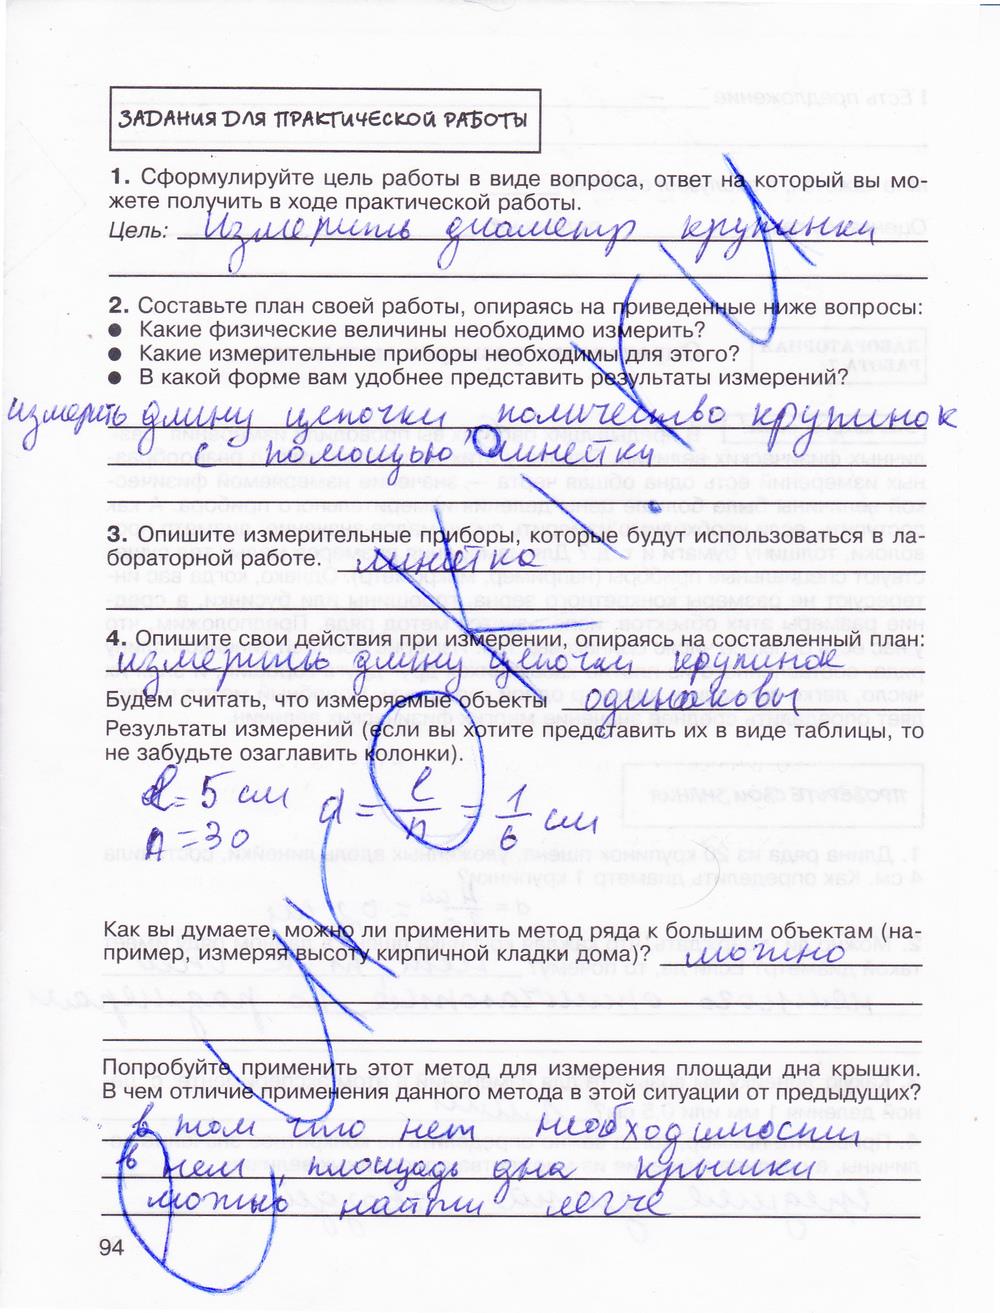 гдз 7 класс рабочая тетрадь страница 94 физика Мартынова, Бовин, Коротаев